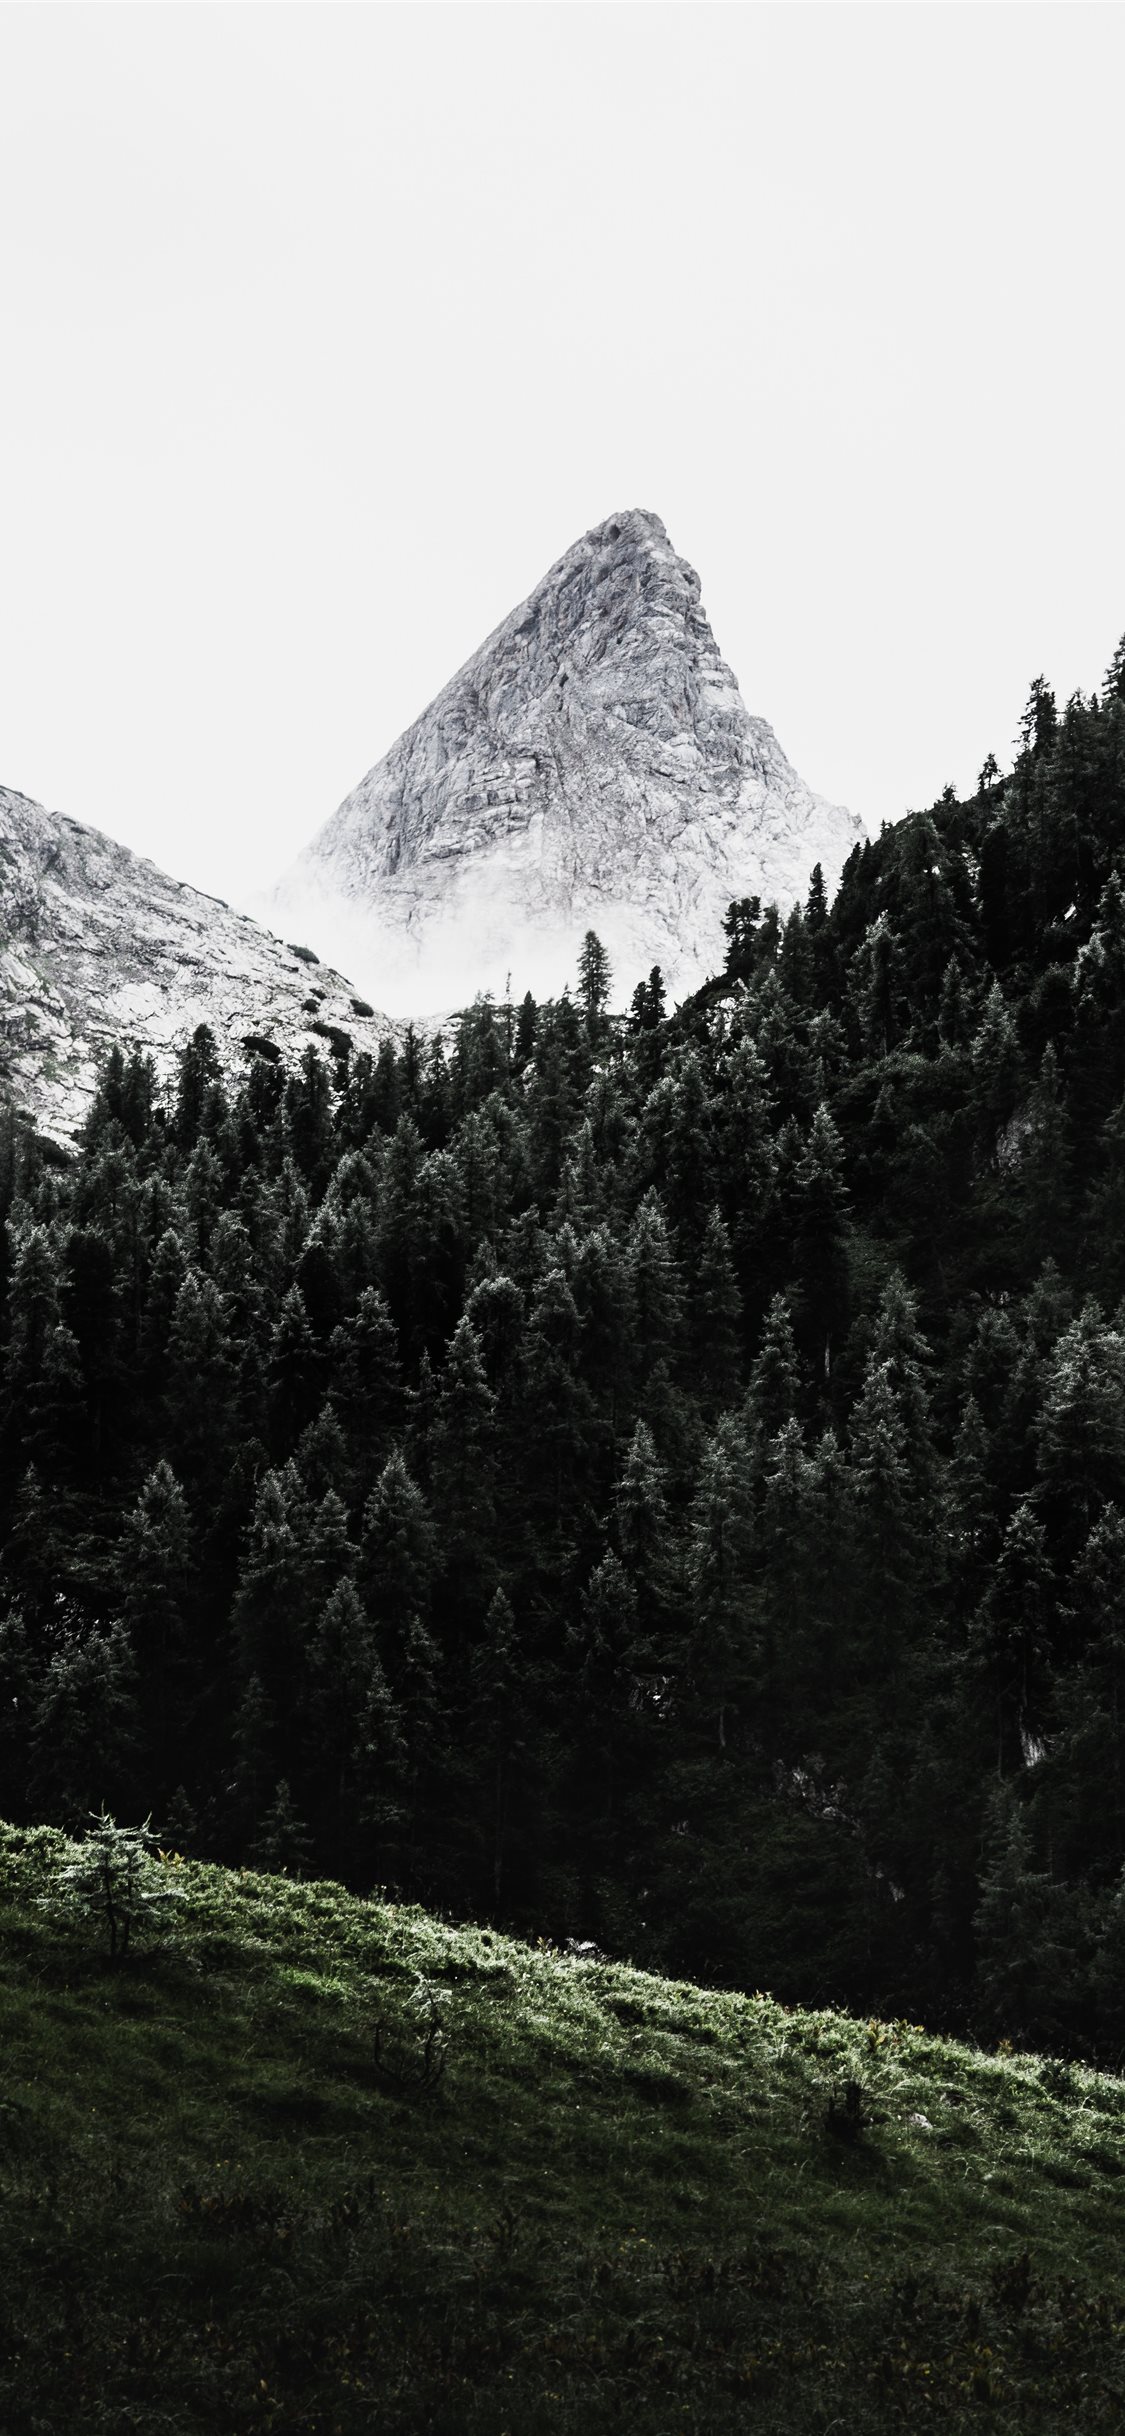 Green Pine Trees Across White Mountain iPhone Wallpaper